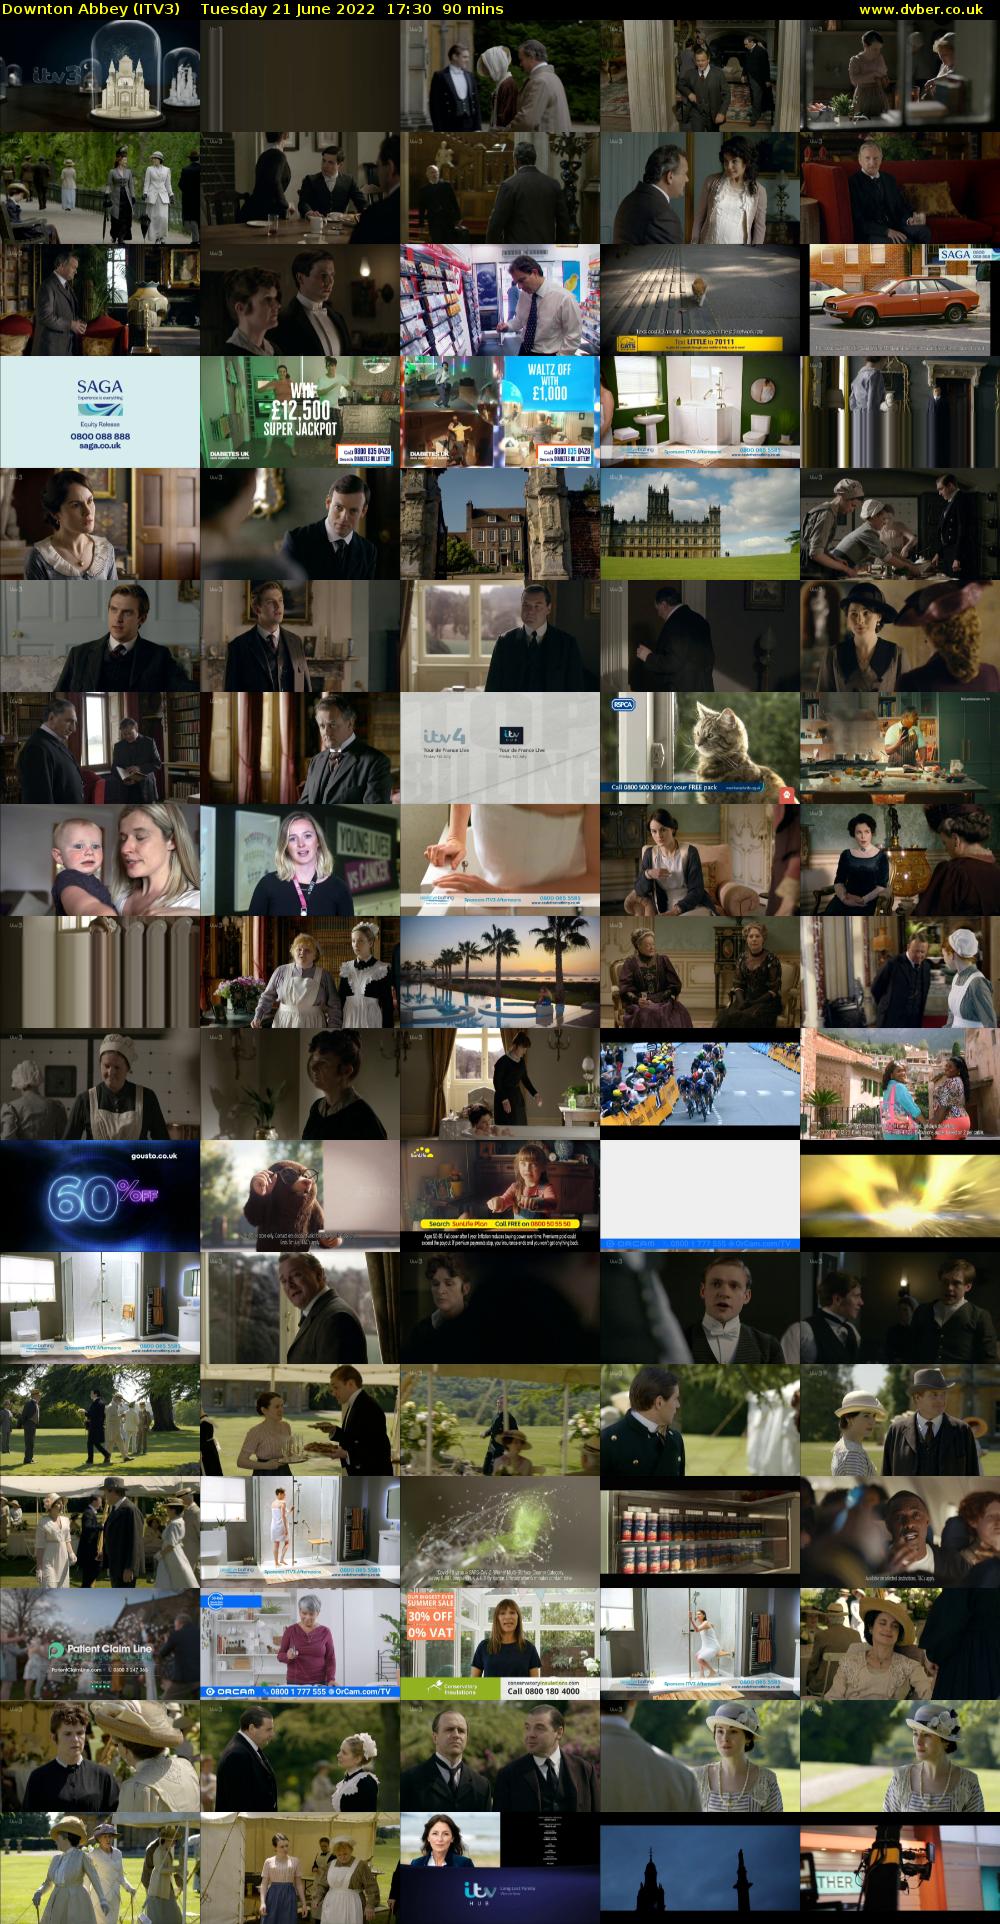 Downton Abbey (ITV3) Tuesday 21 June 2022 17:30 - 19:00